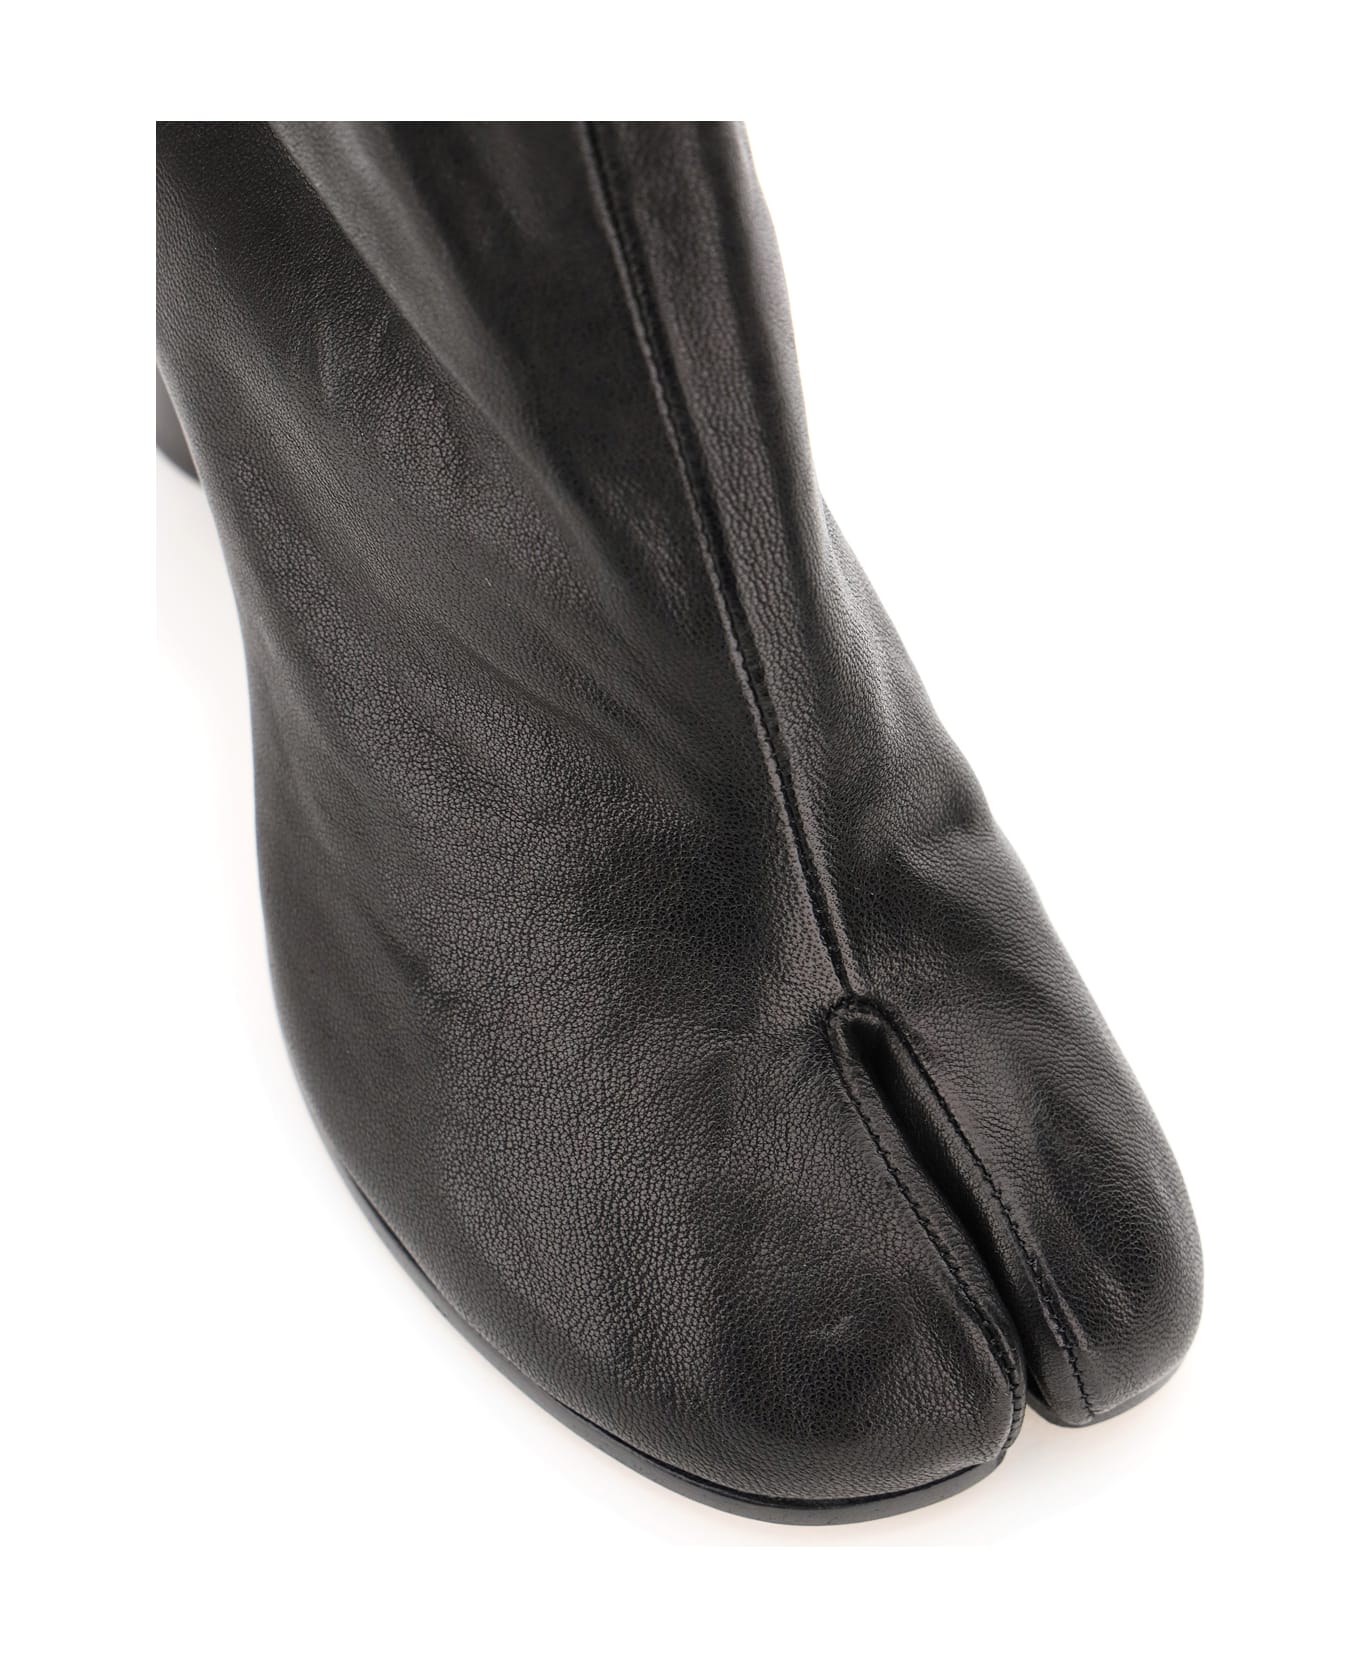 Maison Margiela Tabi Ankle Boots - Black